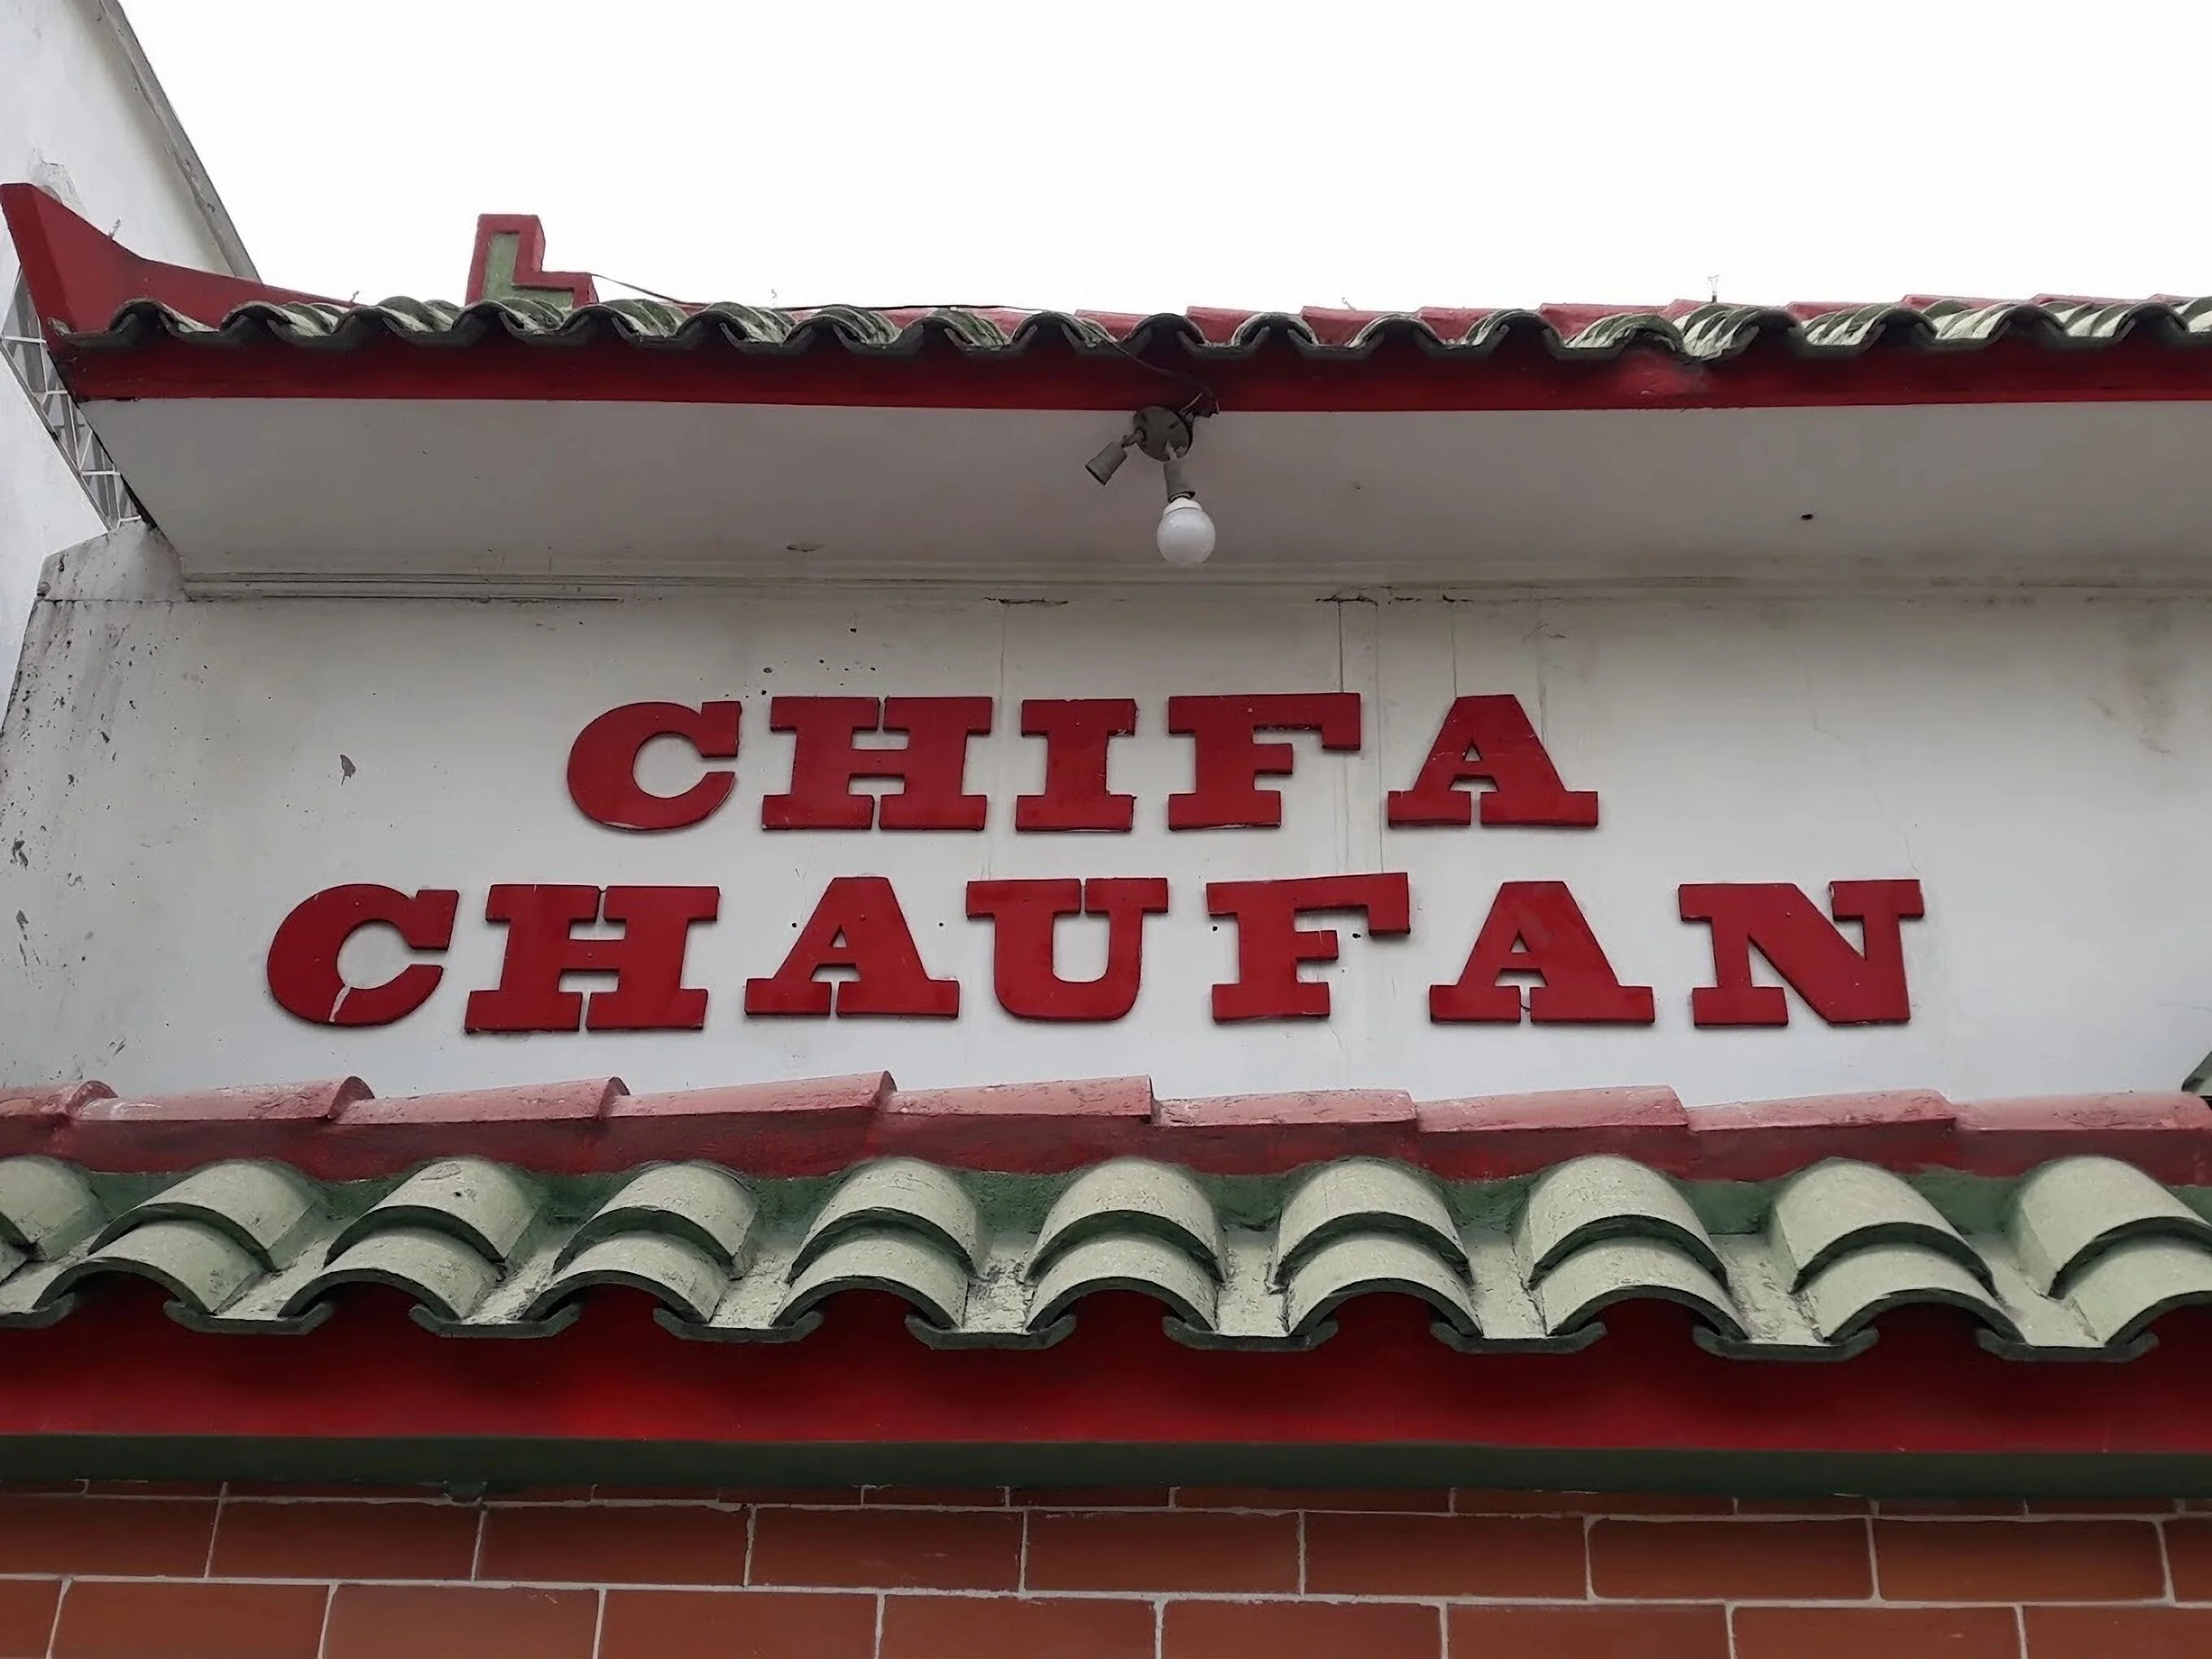 Restaurantes-chifa-chaufan-17194